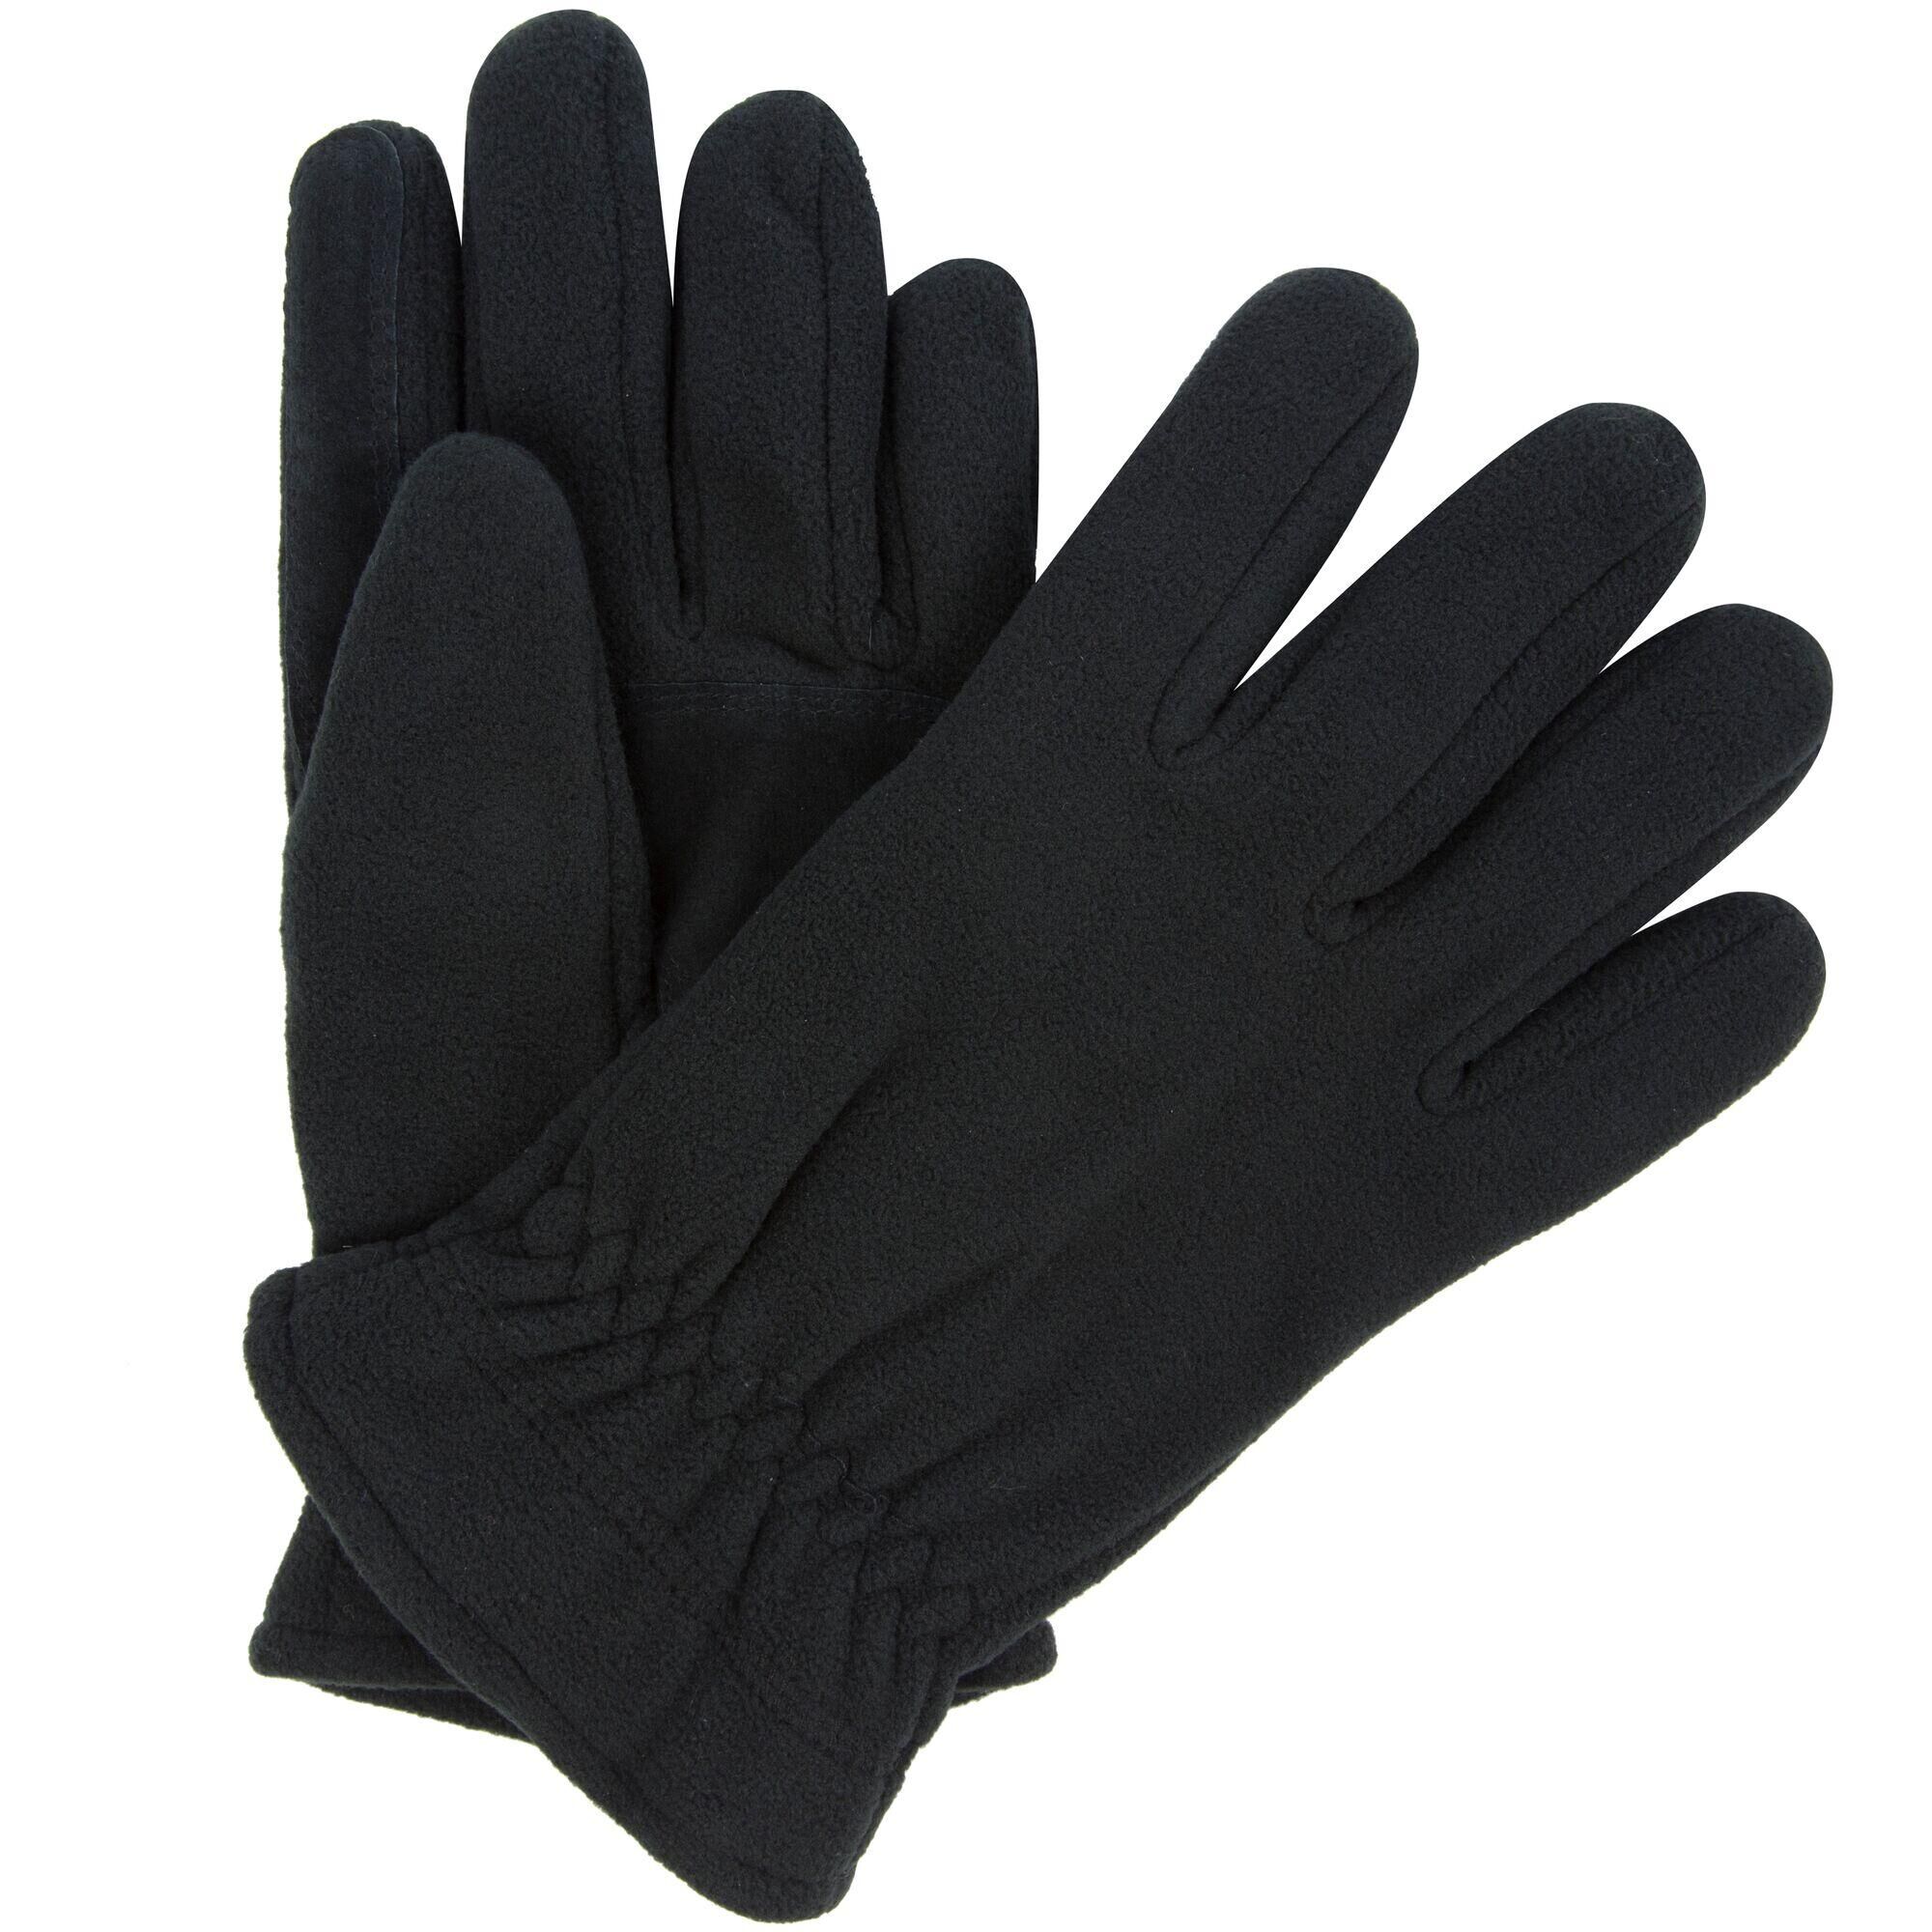 REGATTA Kingsdale Men's Hiking Thermal Gloves - Black